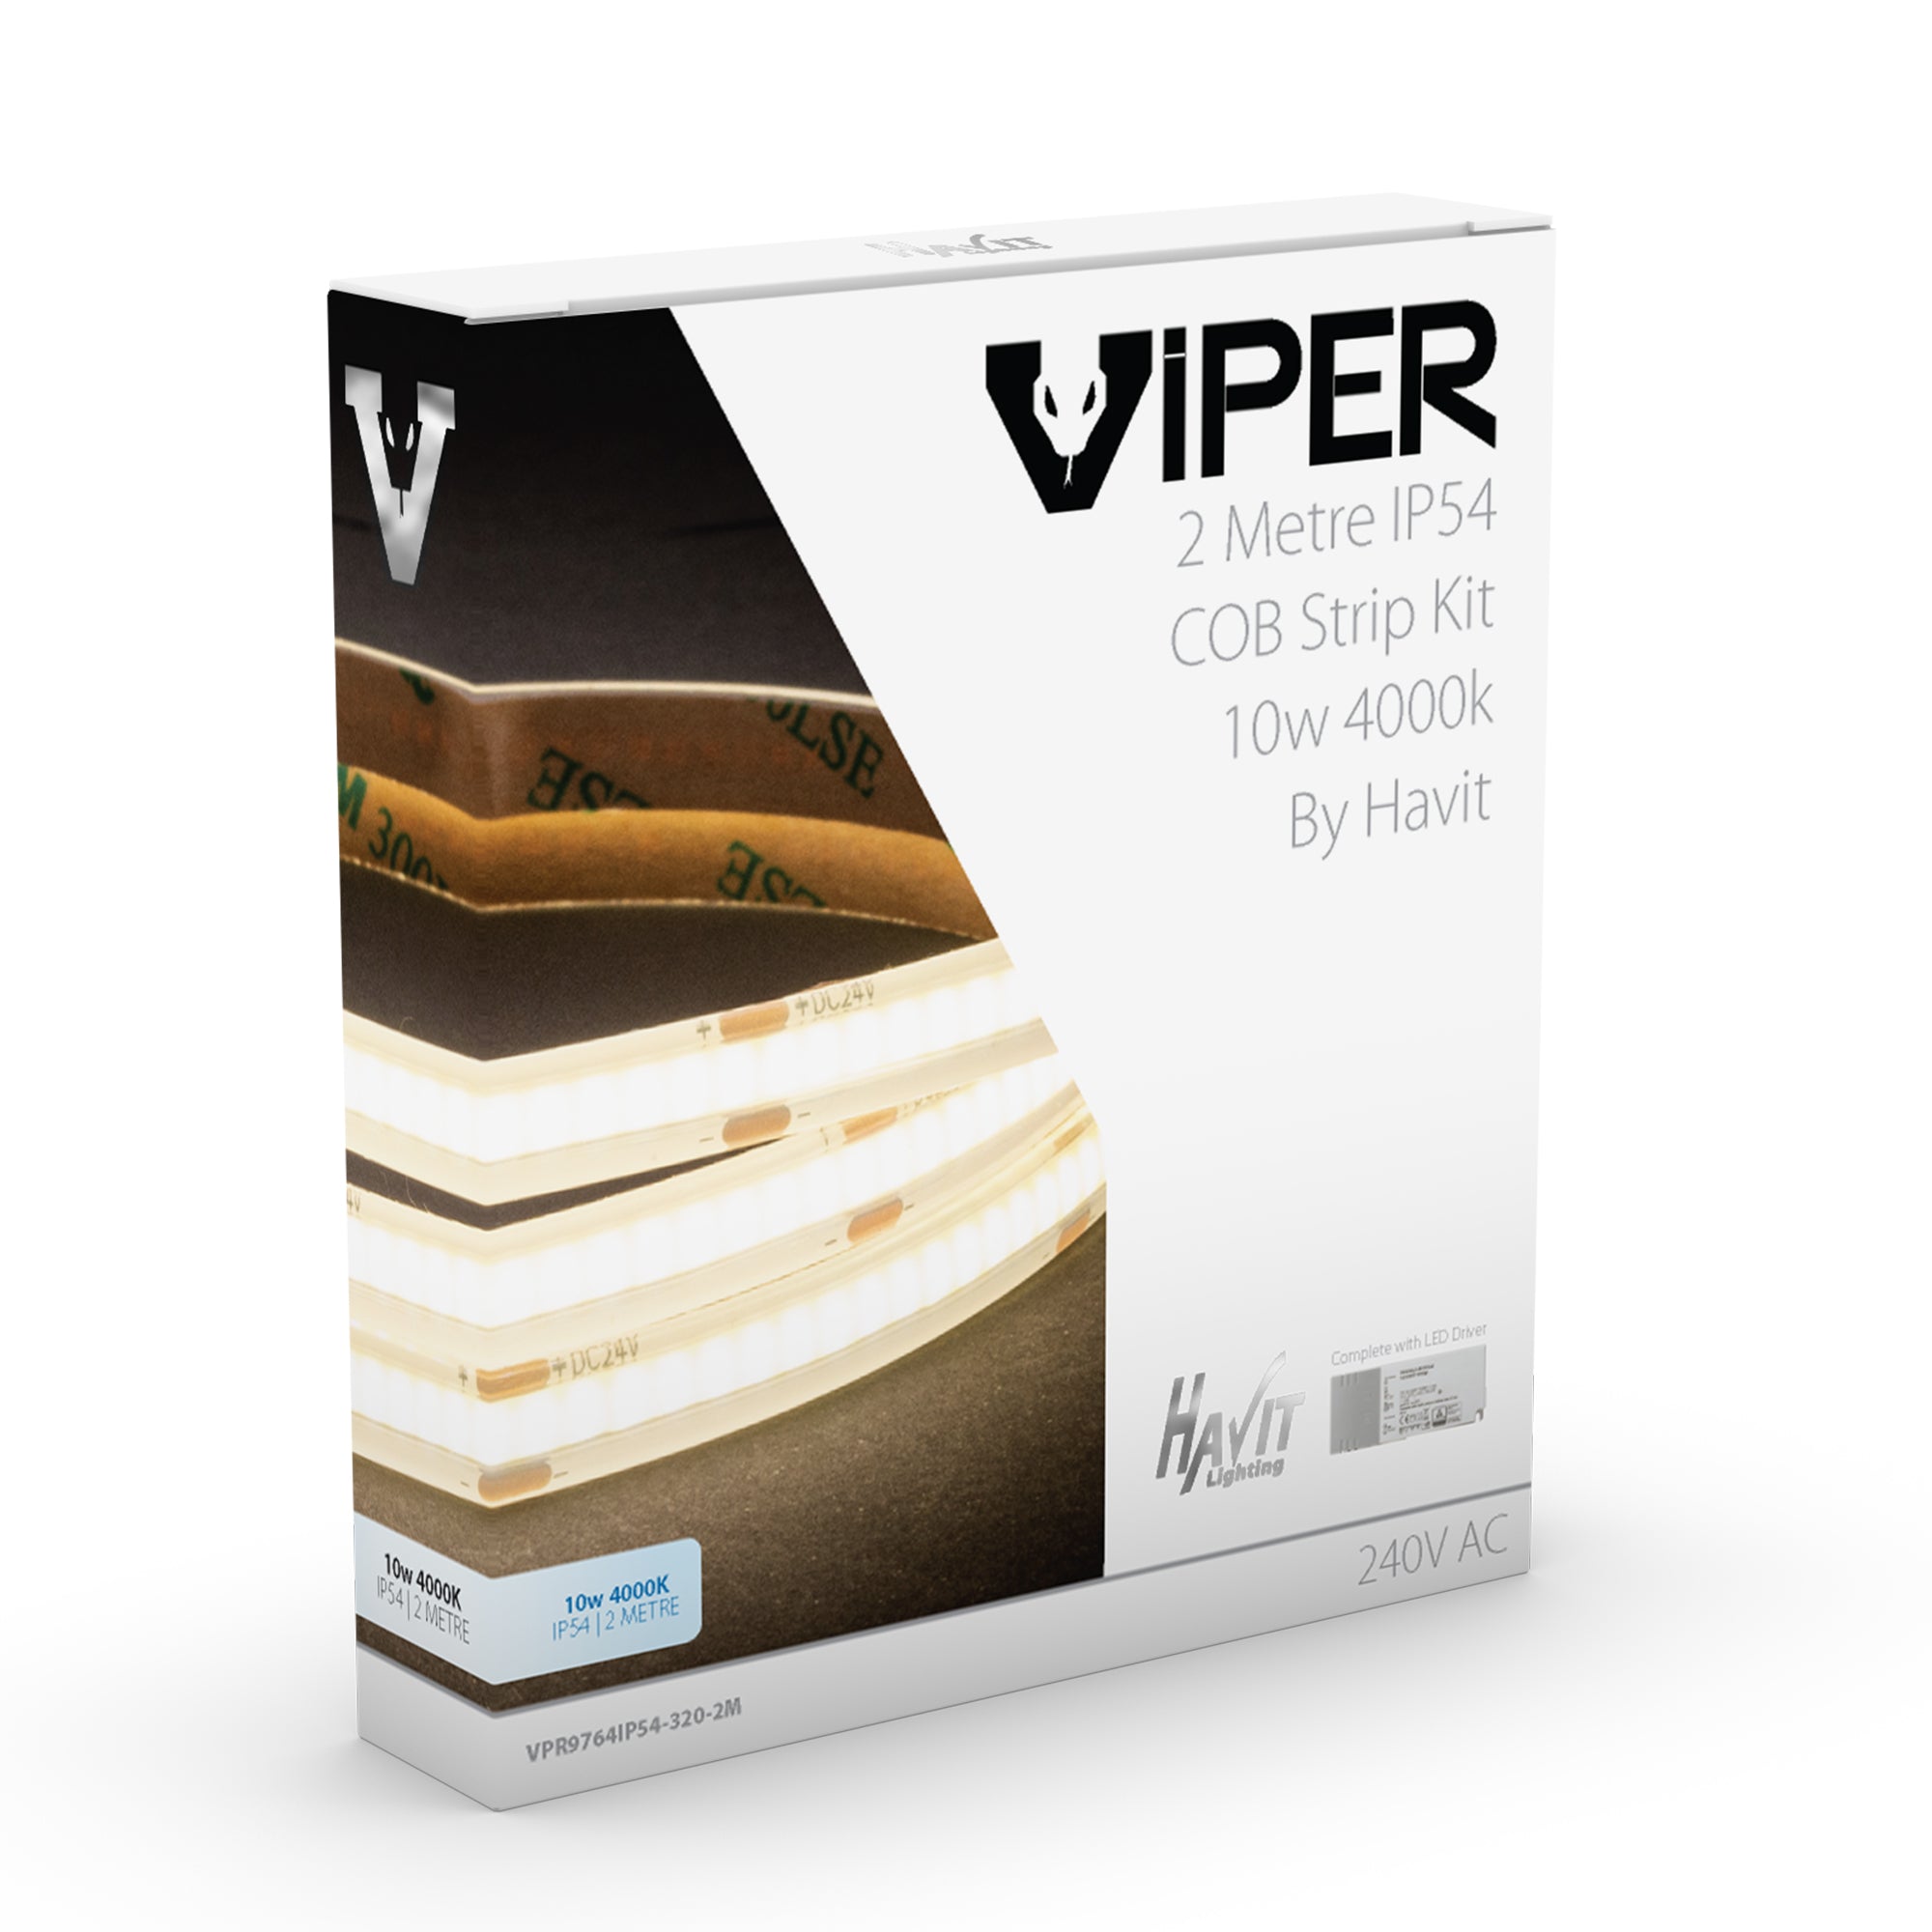 VPR9764IP54-320-2M - Viper COB 10w Per Metre 2m LED Strip kit 4000k